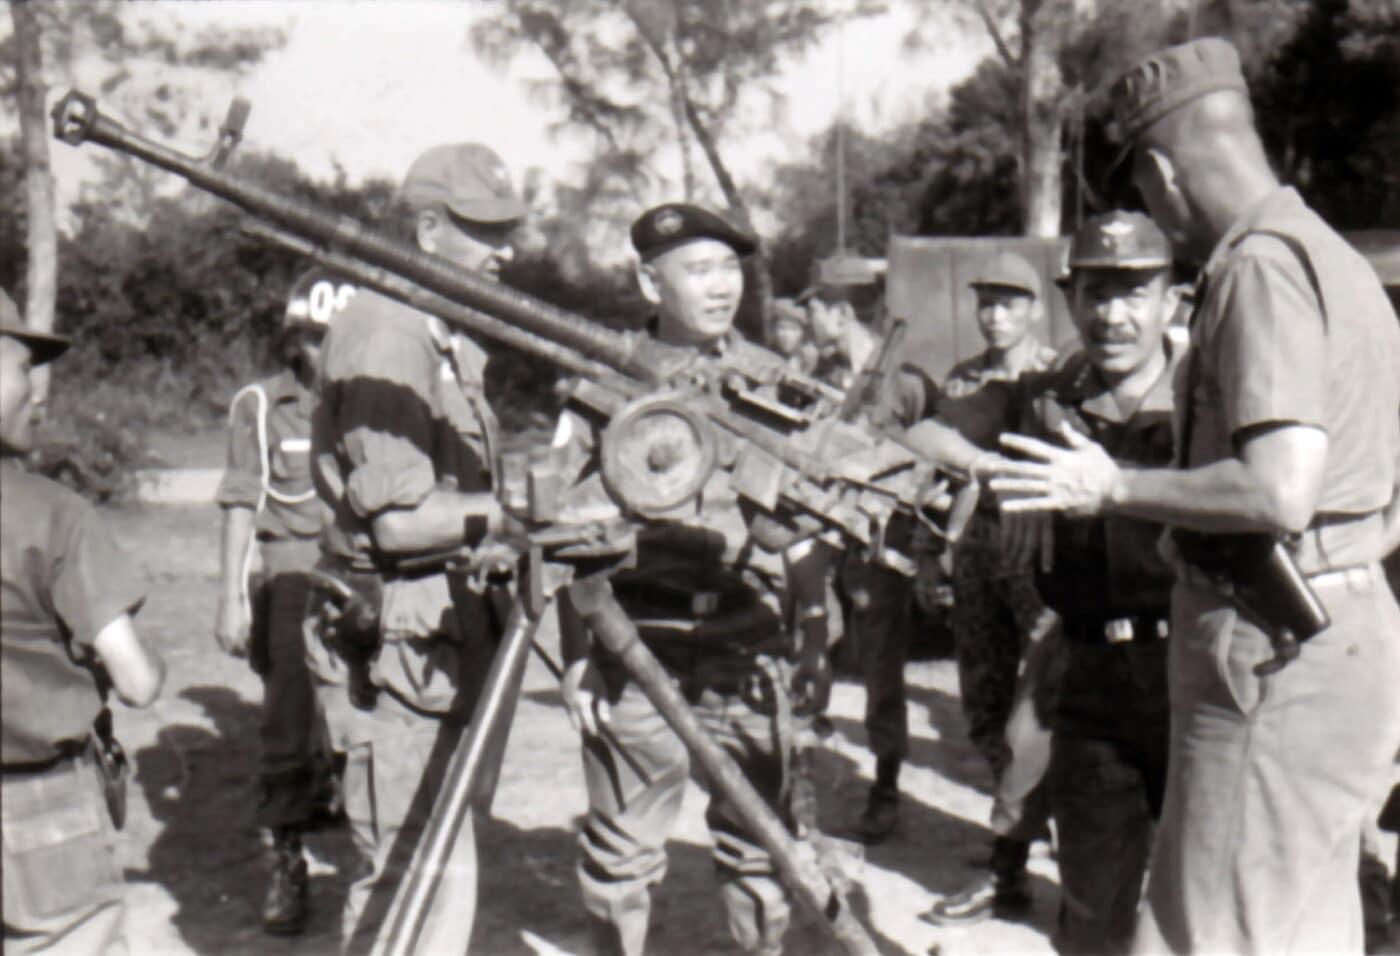 Soldiers examine DSHK heavy machine gun outside of Quang Ngai